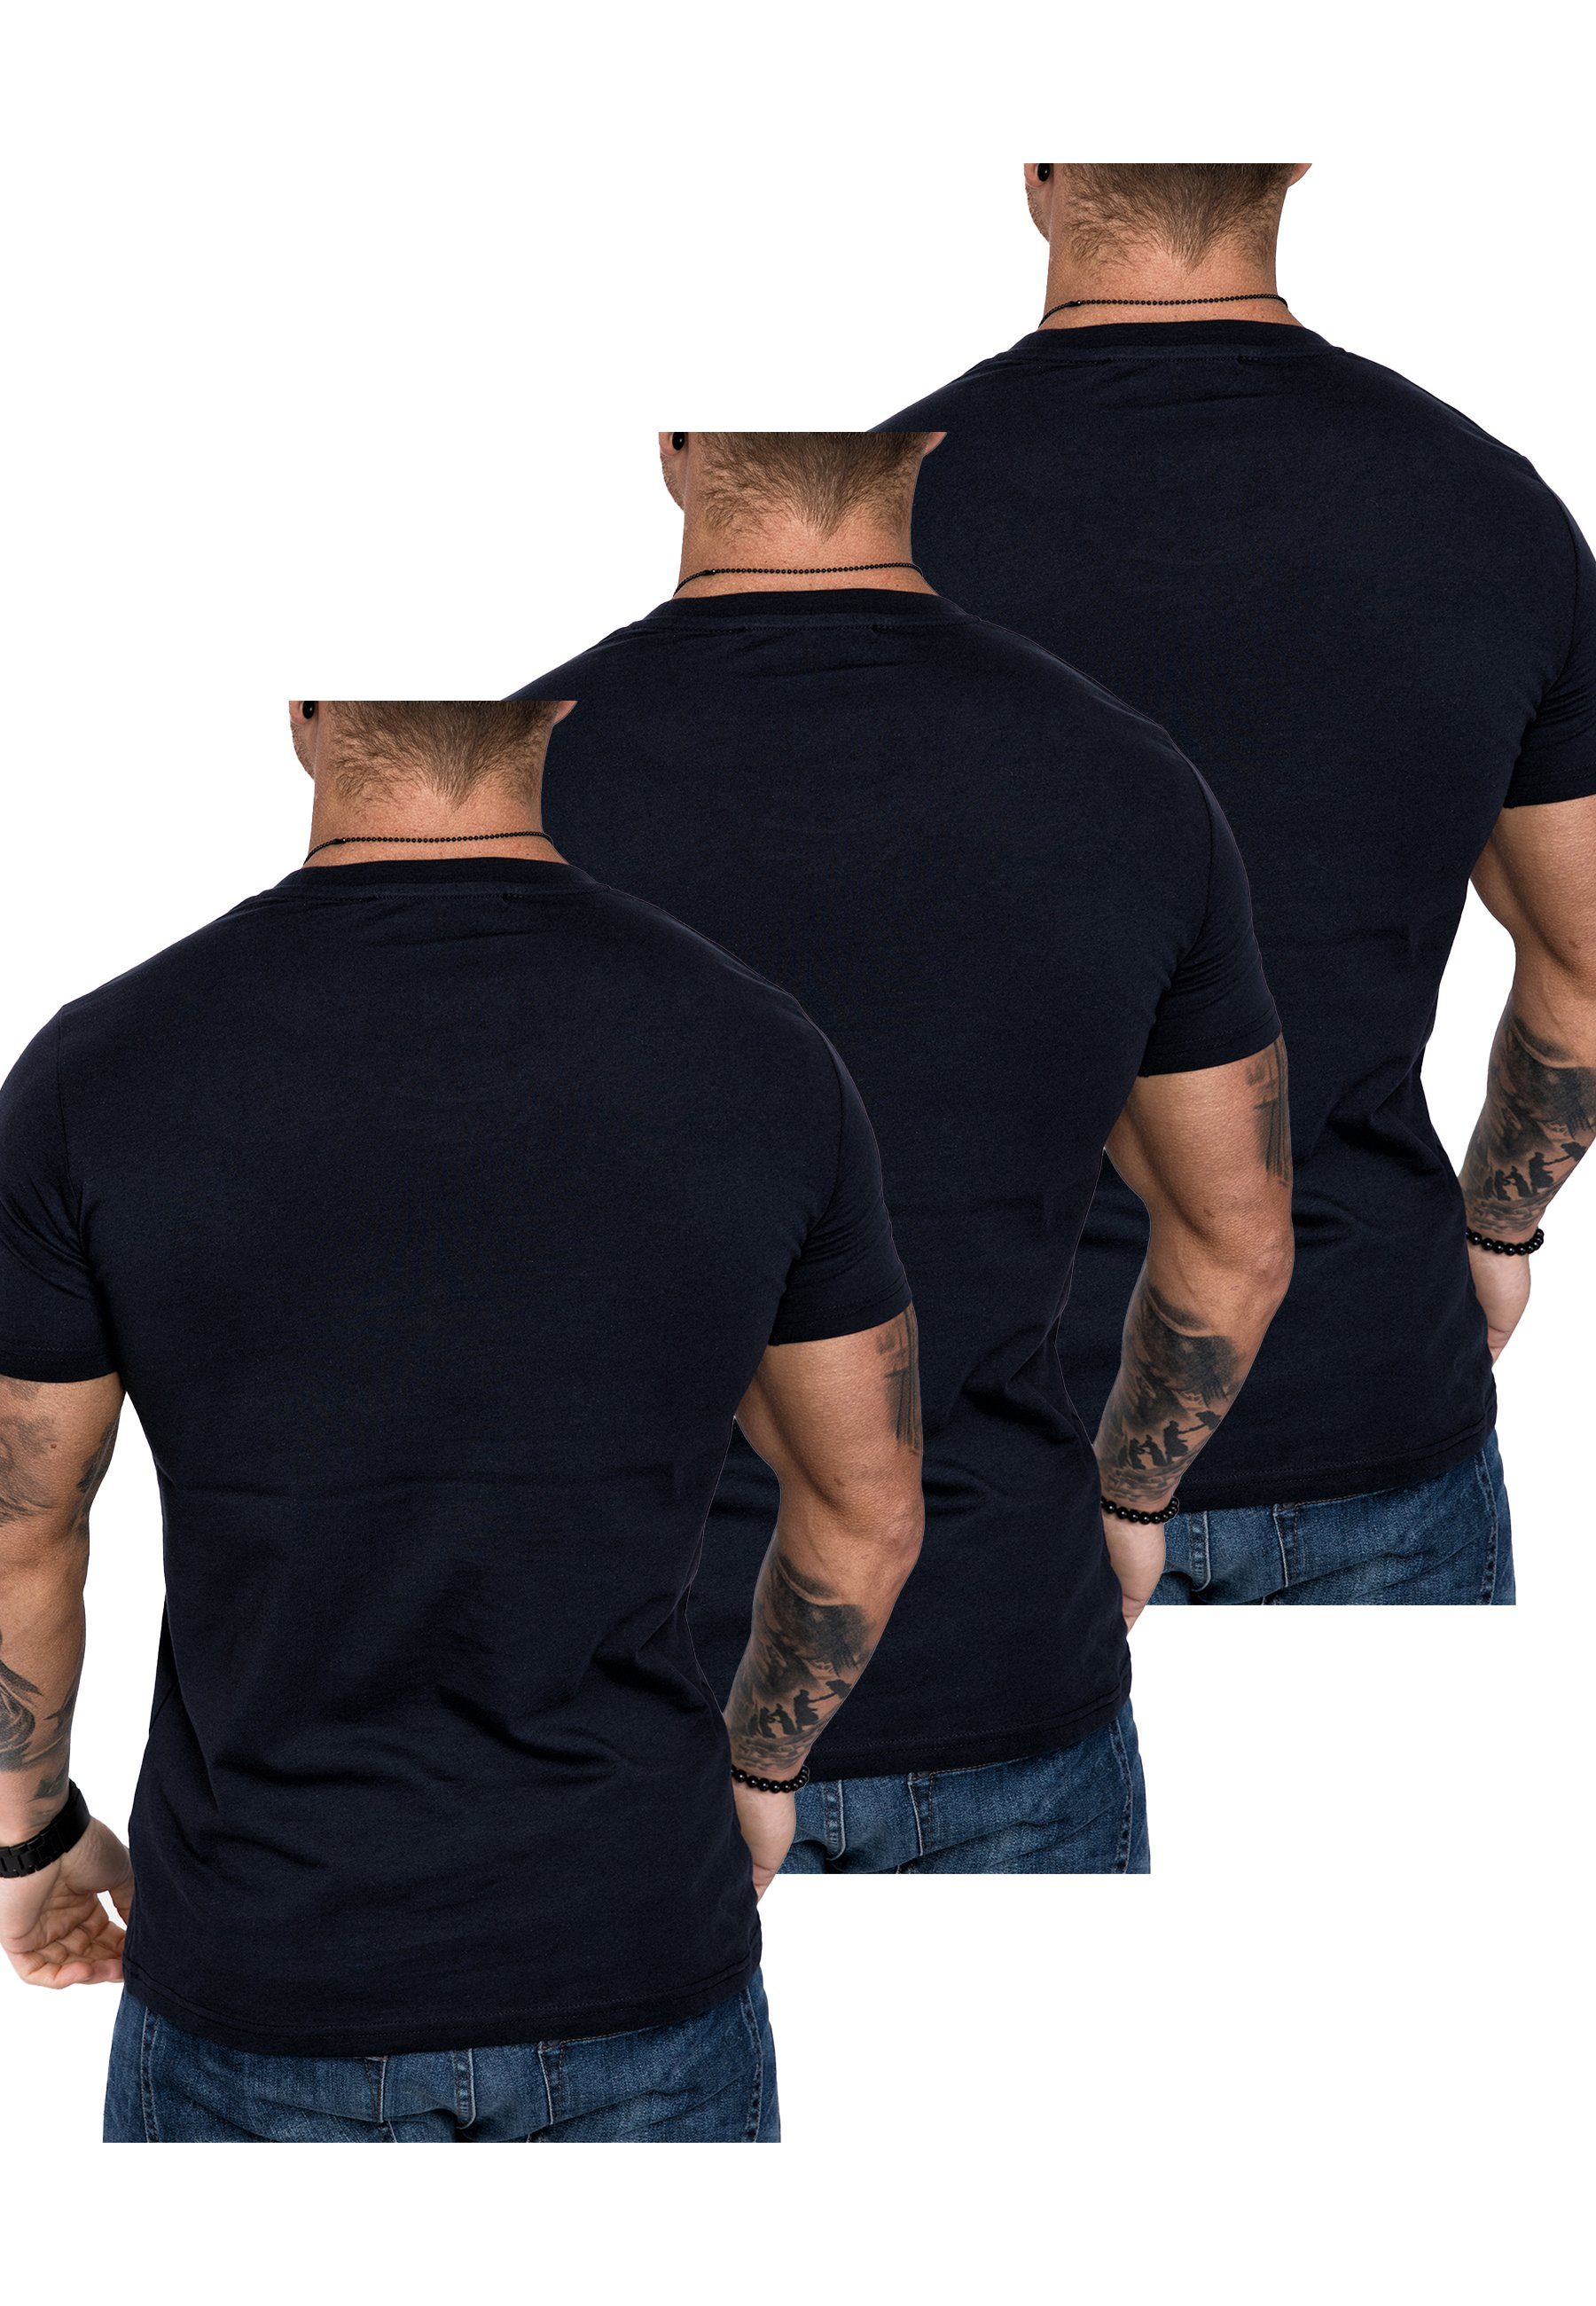 mit LANCASTER T-Shirt T-Shirt Herren Amaci&Sons 3. 3er-Pack (3x Basic (3er-Pack) T-Shirts Rundhalsausschnitt Navyblau) Oversize